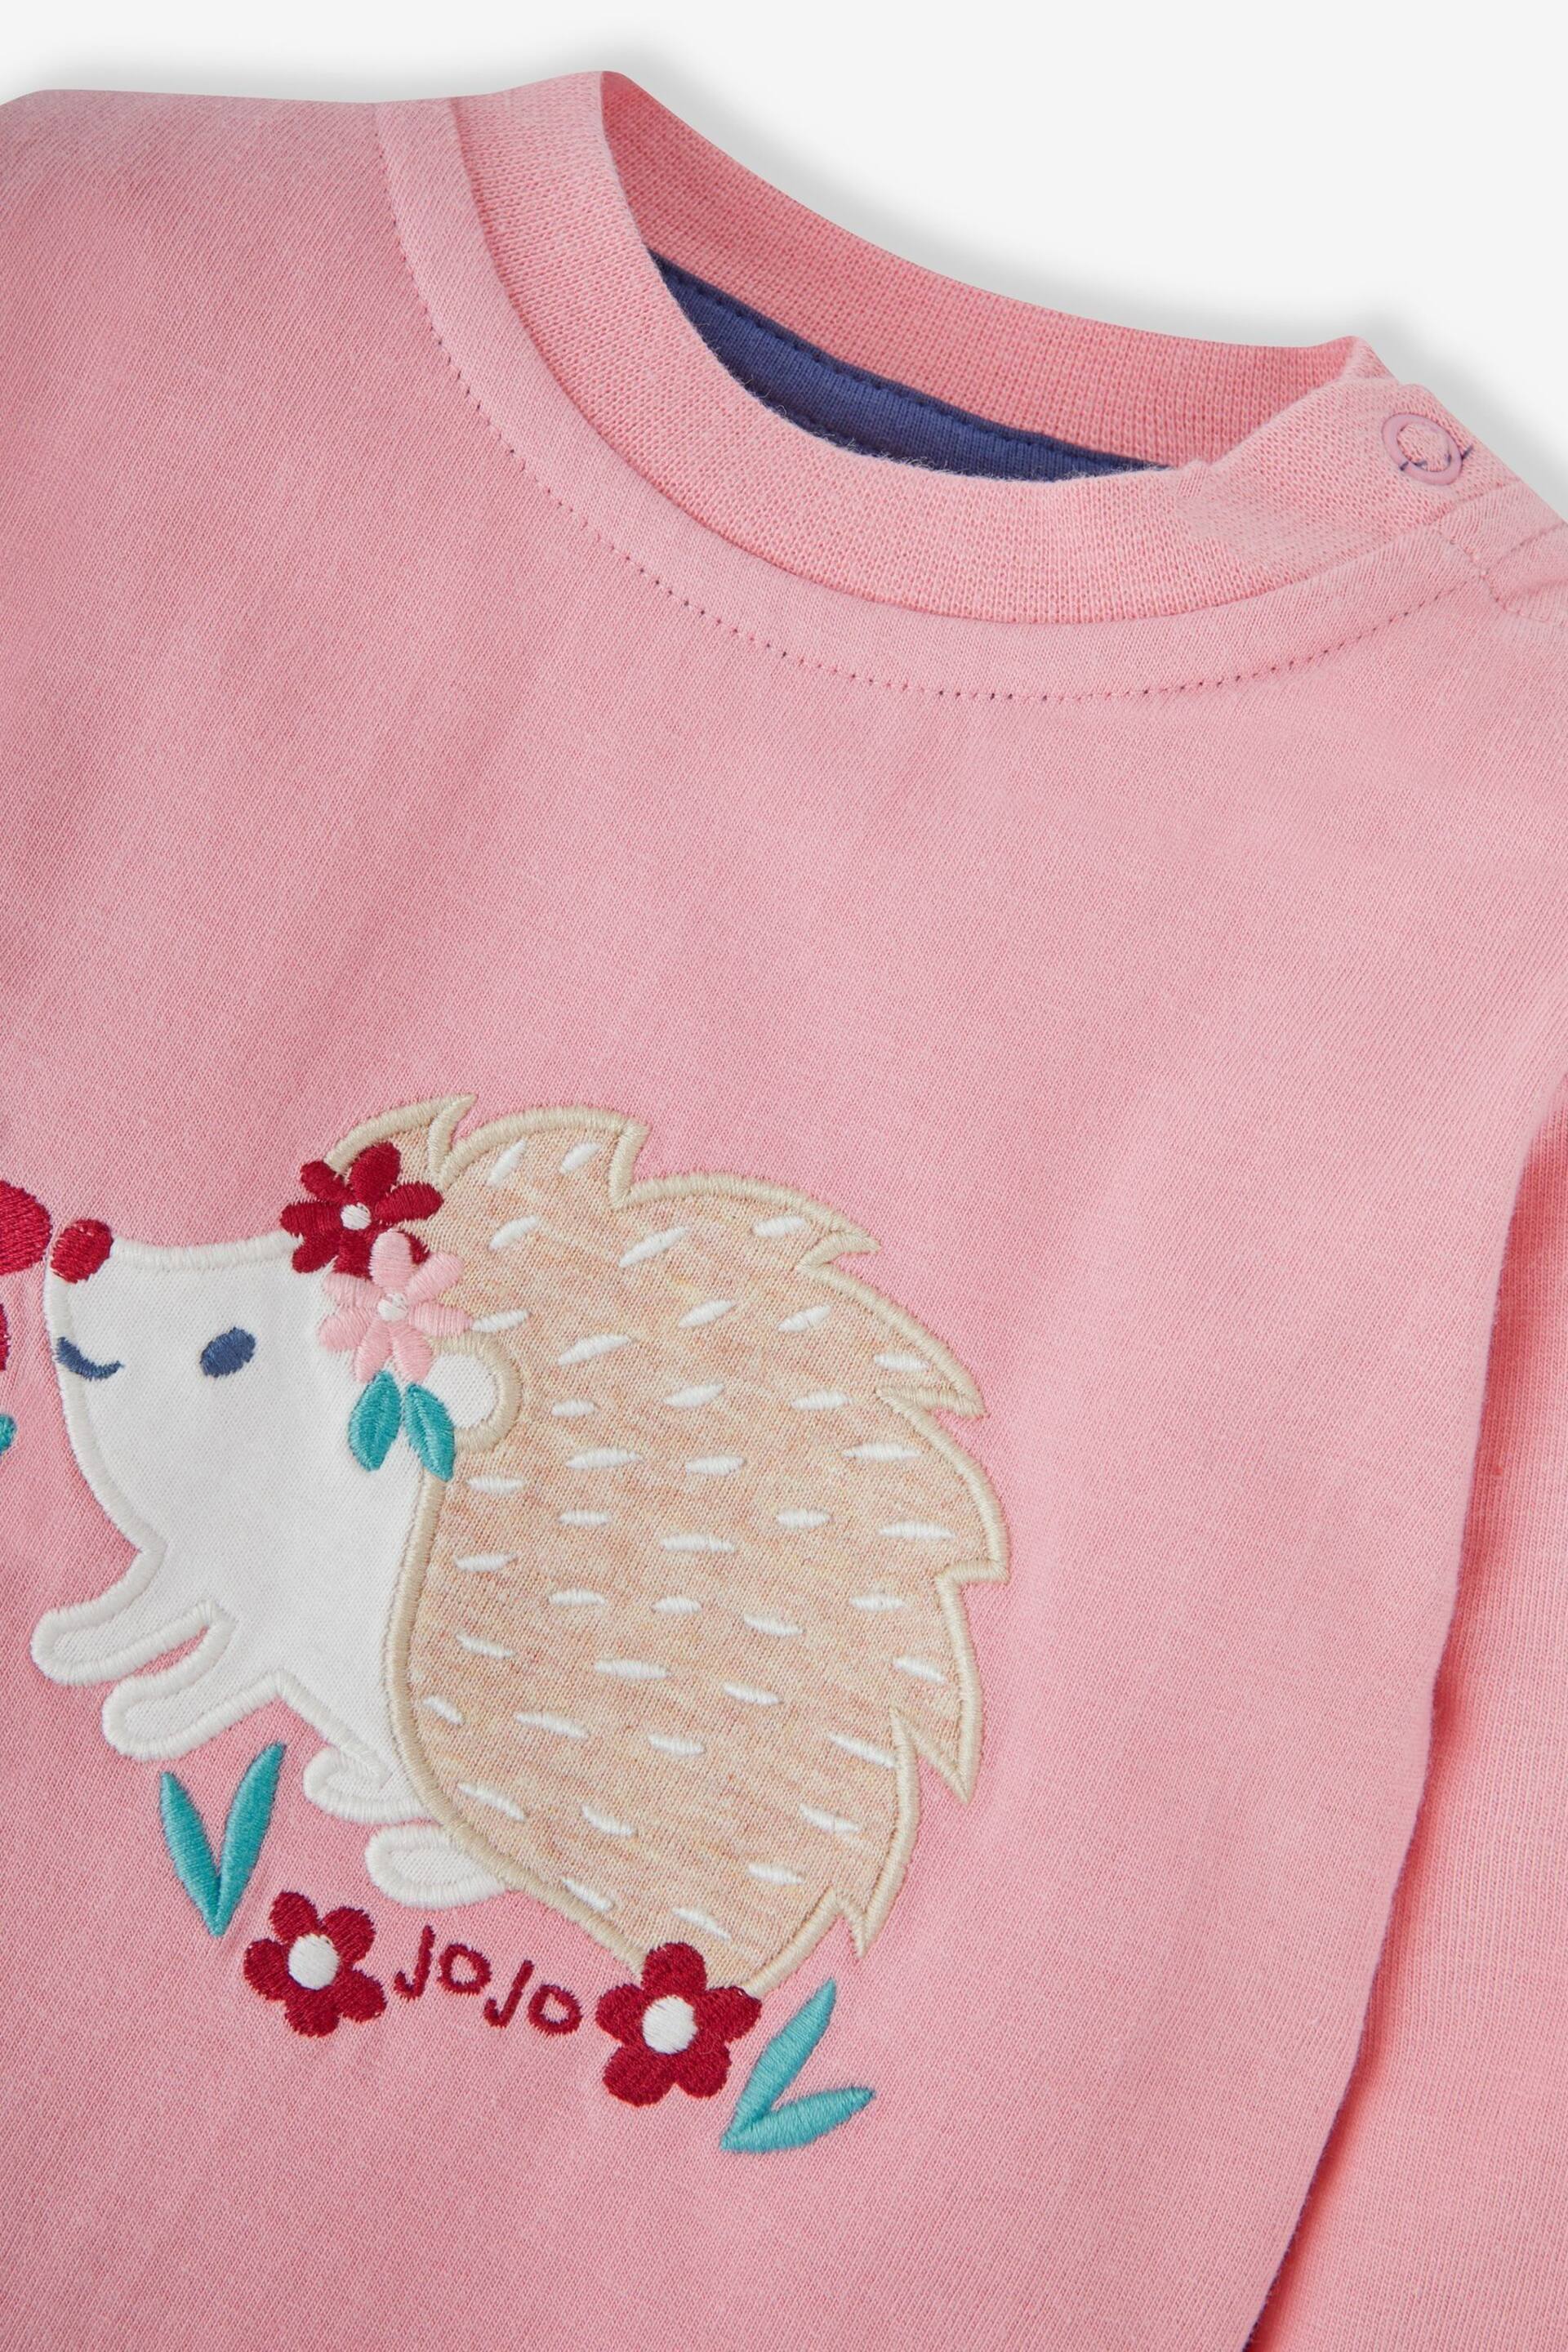 JoJo Maman Bébé Pink Hedgehog 2-Pack Appliqué & Stripe Baby Tops - Image 4 of 5